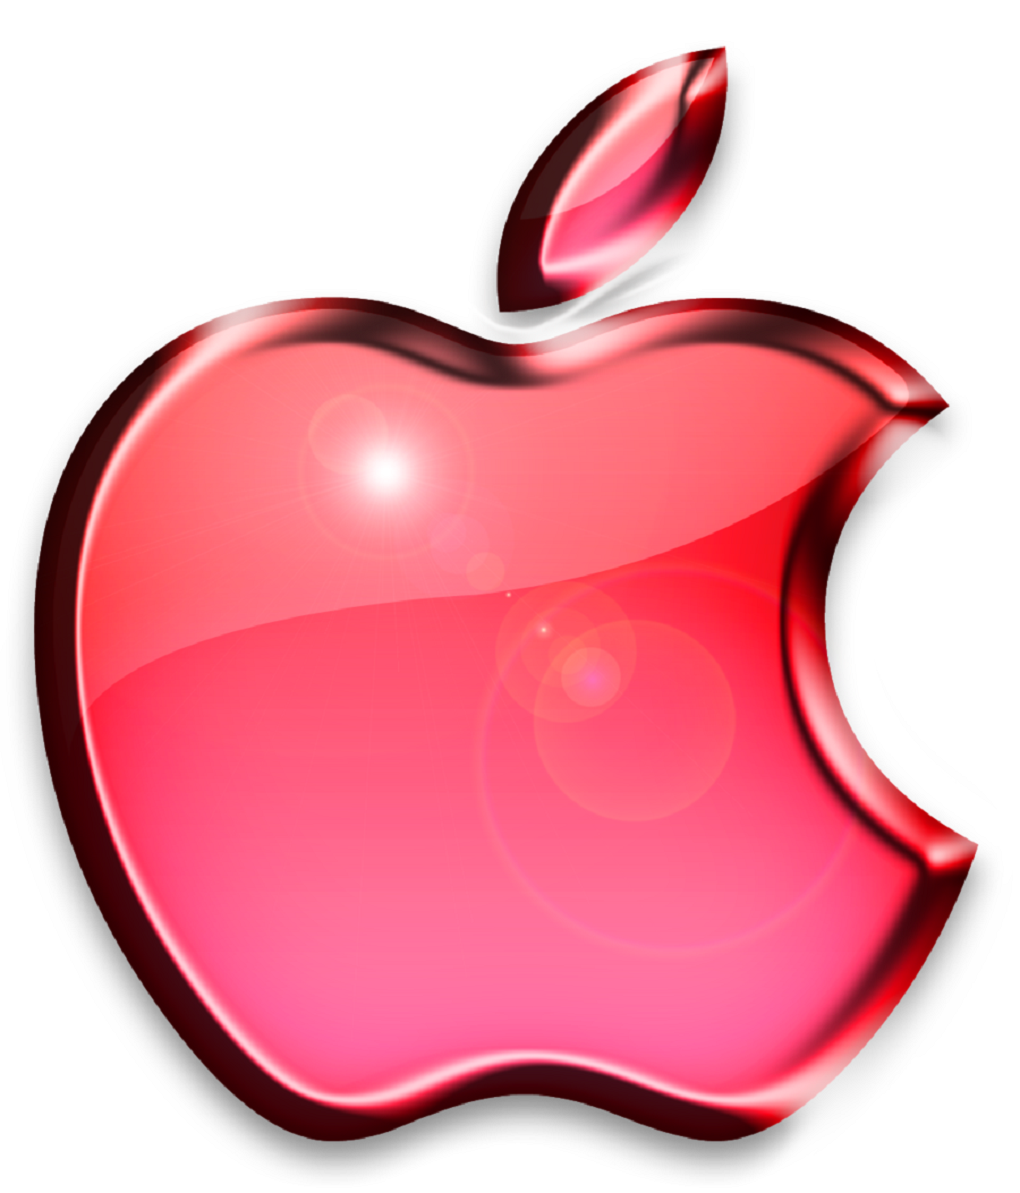 apple logo pink colour